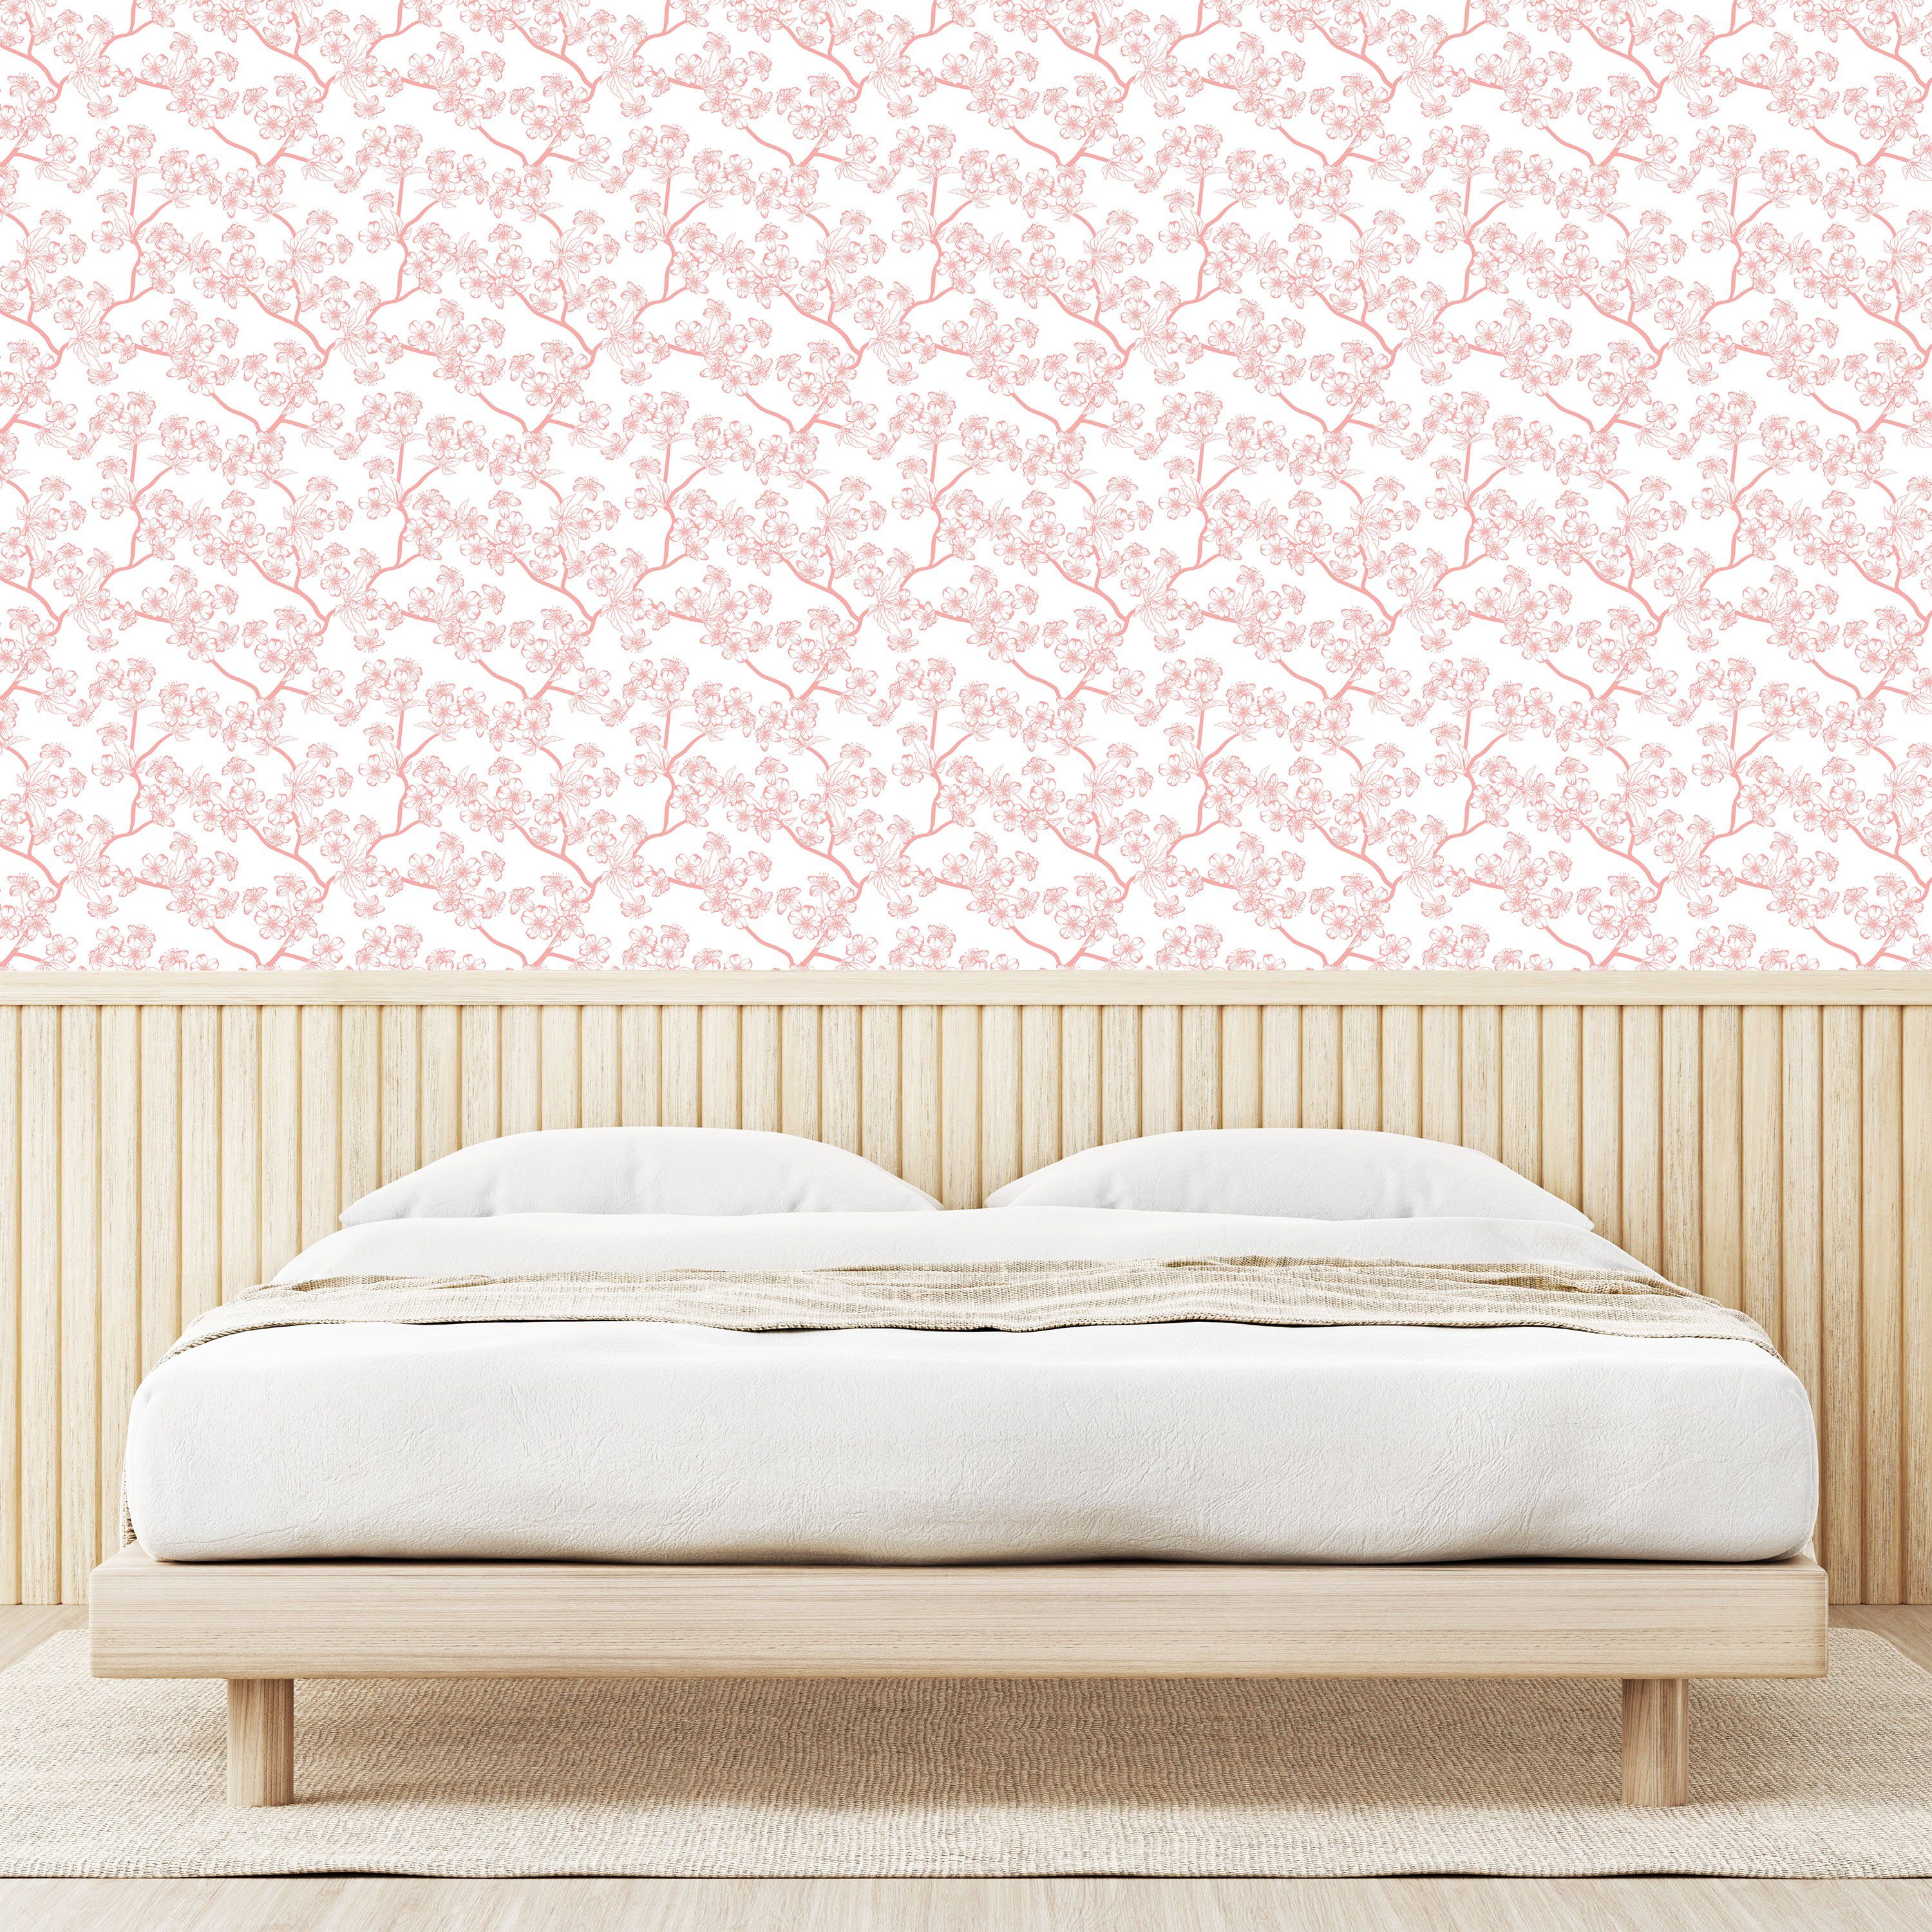 Abakuhaus Vinyltapete selbstklebendes Wohnzimmer Kirschblüte Küchenakzent, Art Sakura Retro